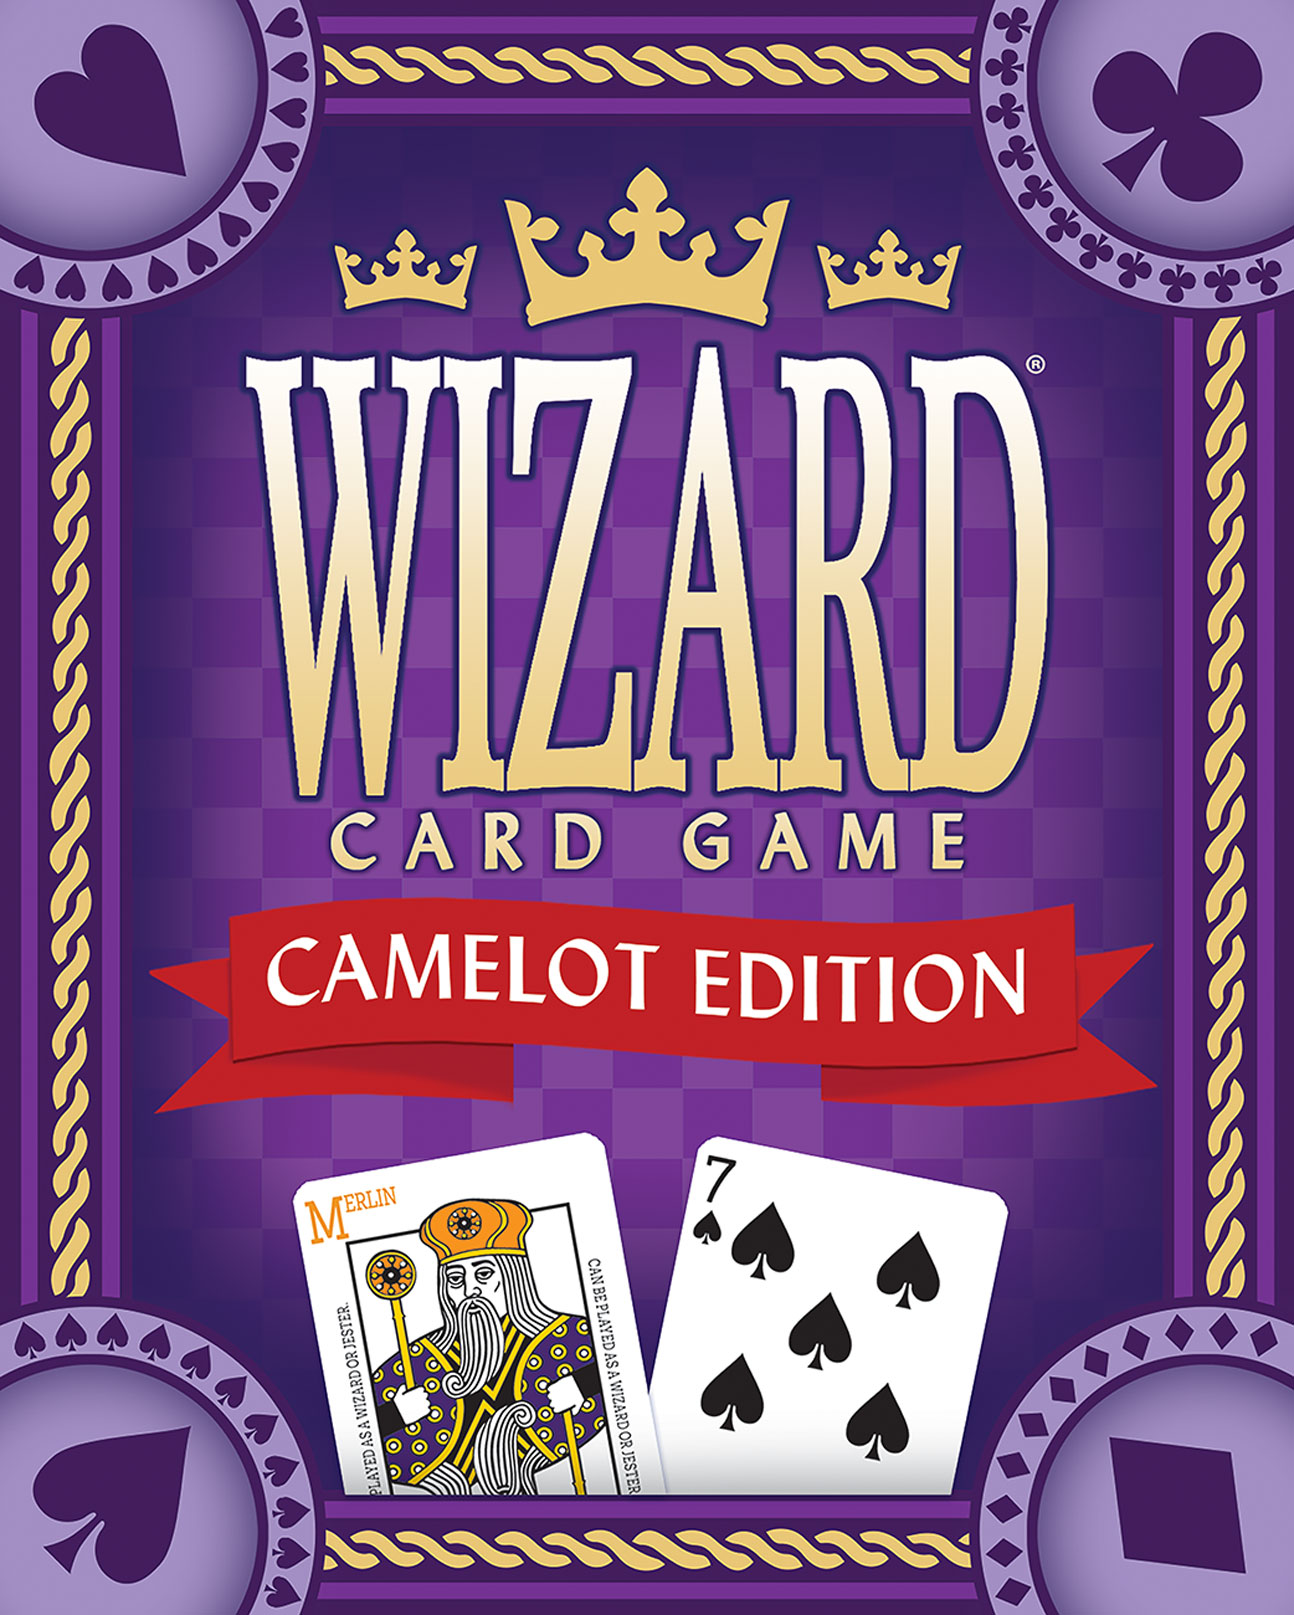 Wizard Card Game Camelot Edition Волшебная карточная игра издание Камелота %% 